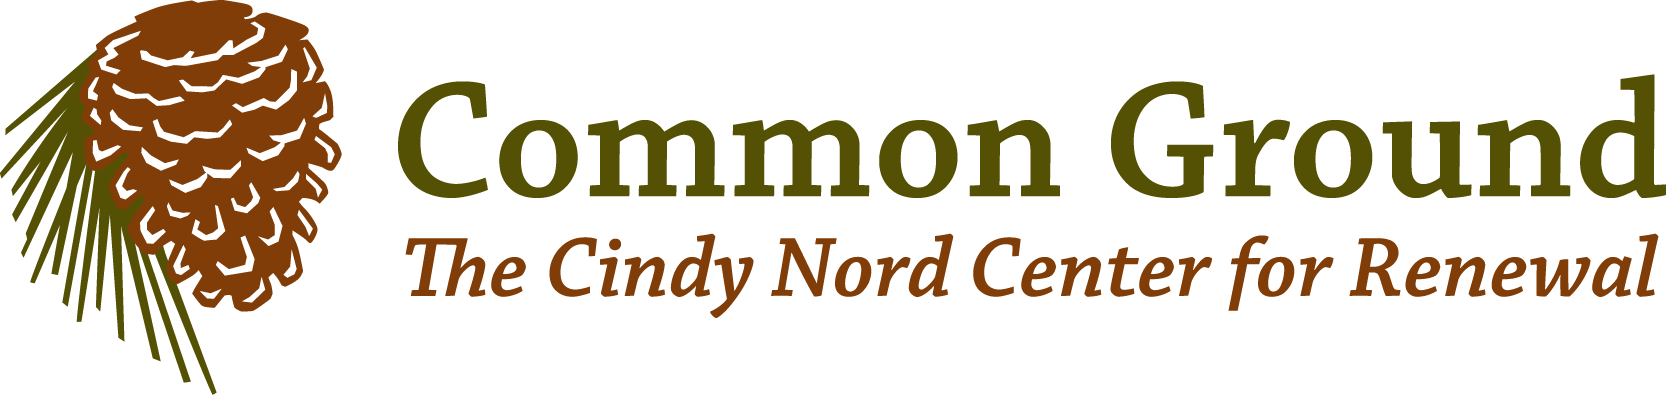 Common Ground or Common Ground Zipline Canopy Tour logo